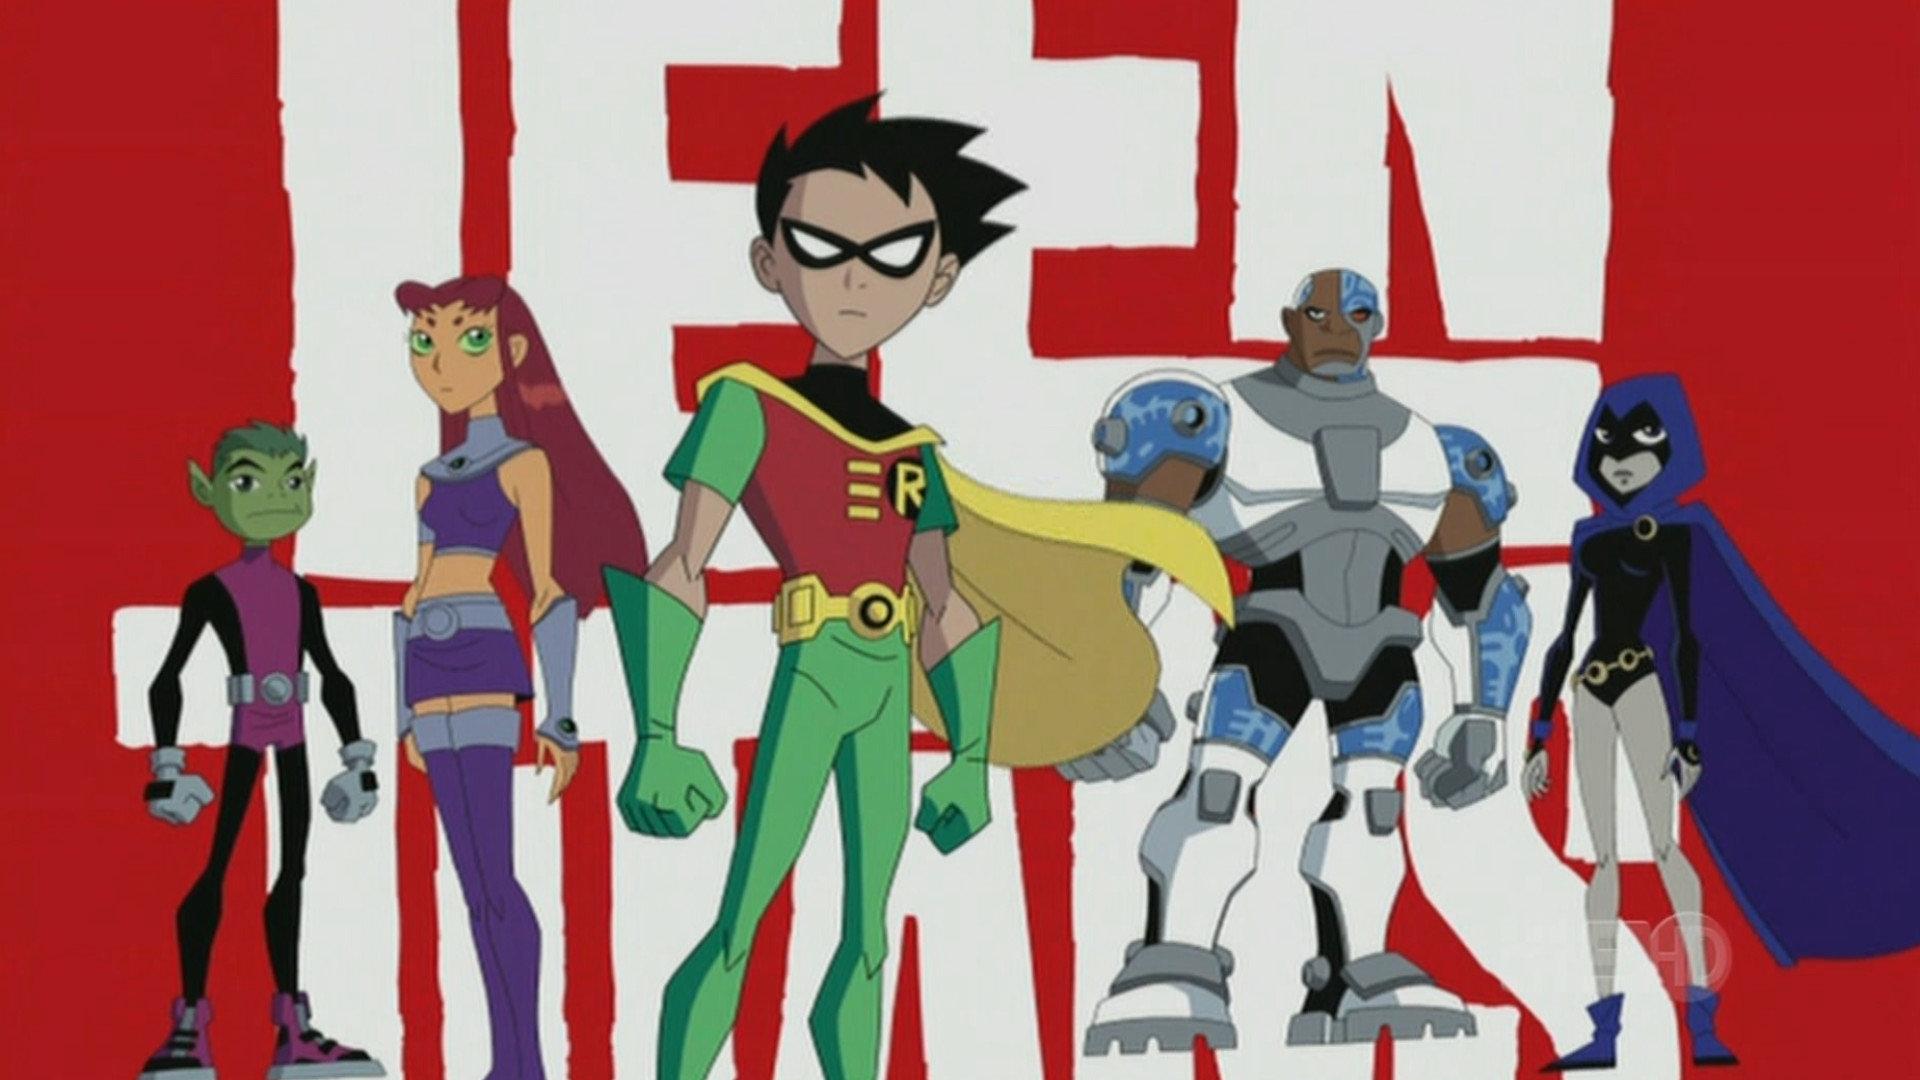 Teen Titans Go! wallpapers HD for desktop backgrounds